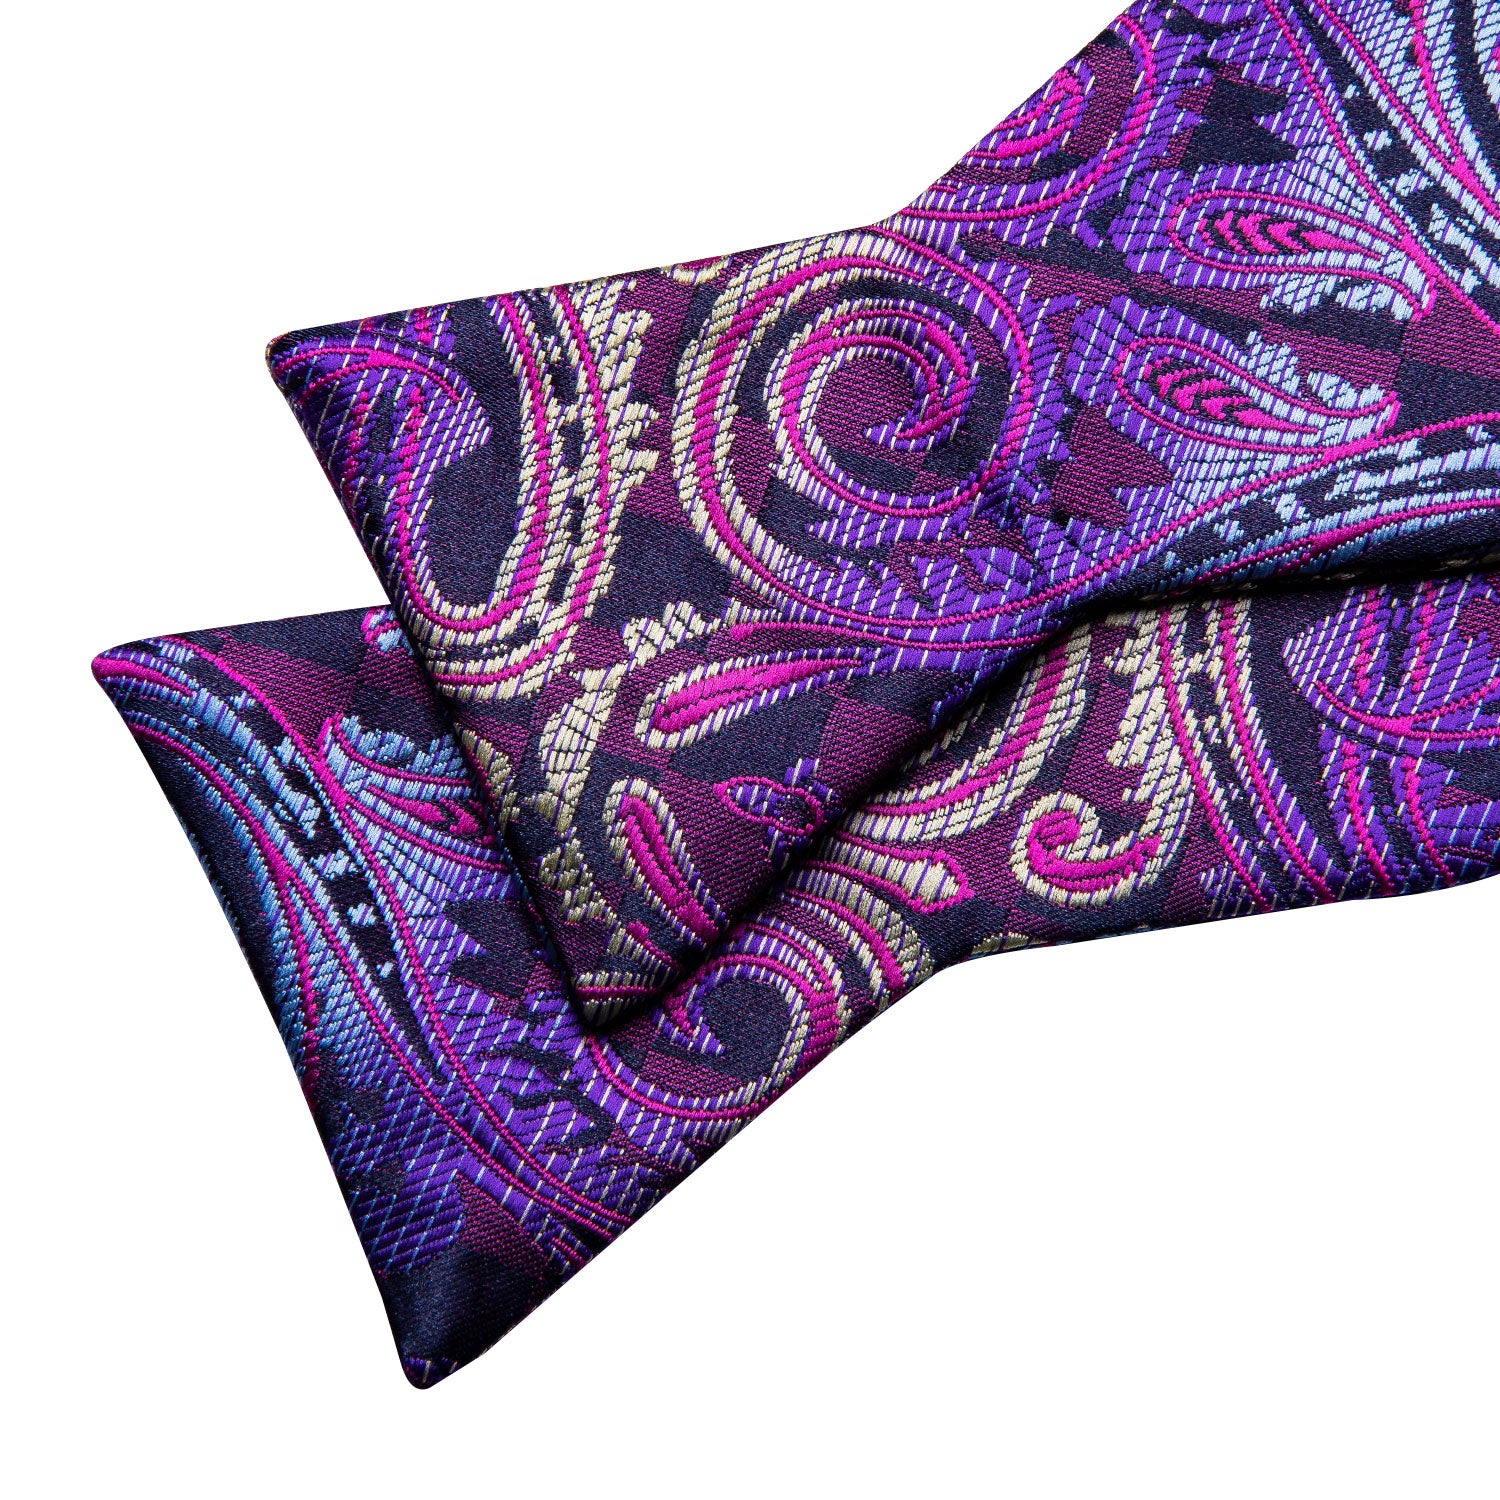 Purple Floral Self Tie Bow Tie Hanky Cufflinks Set